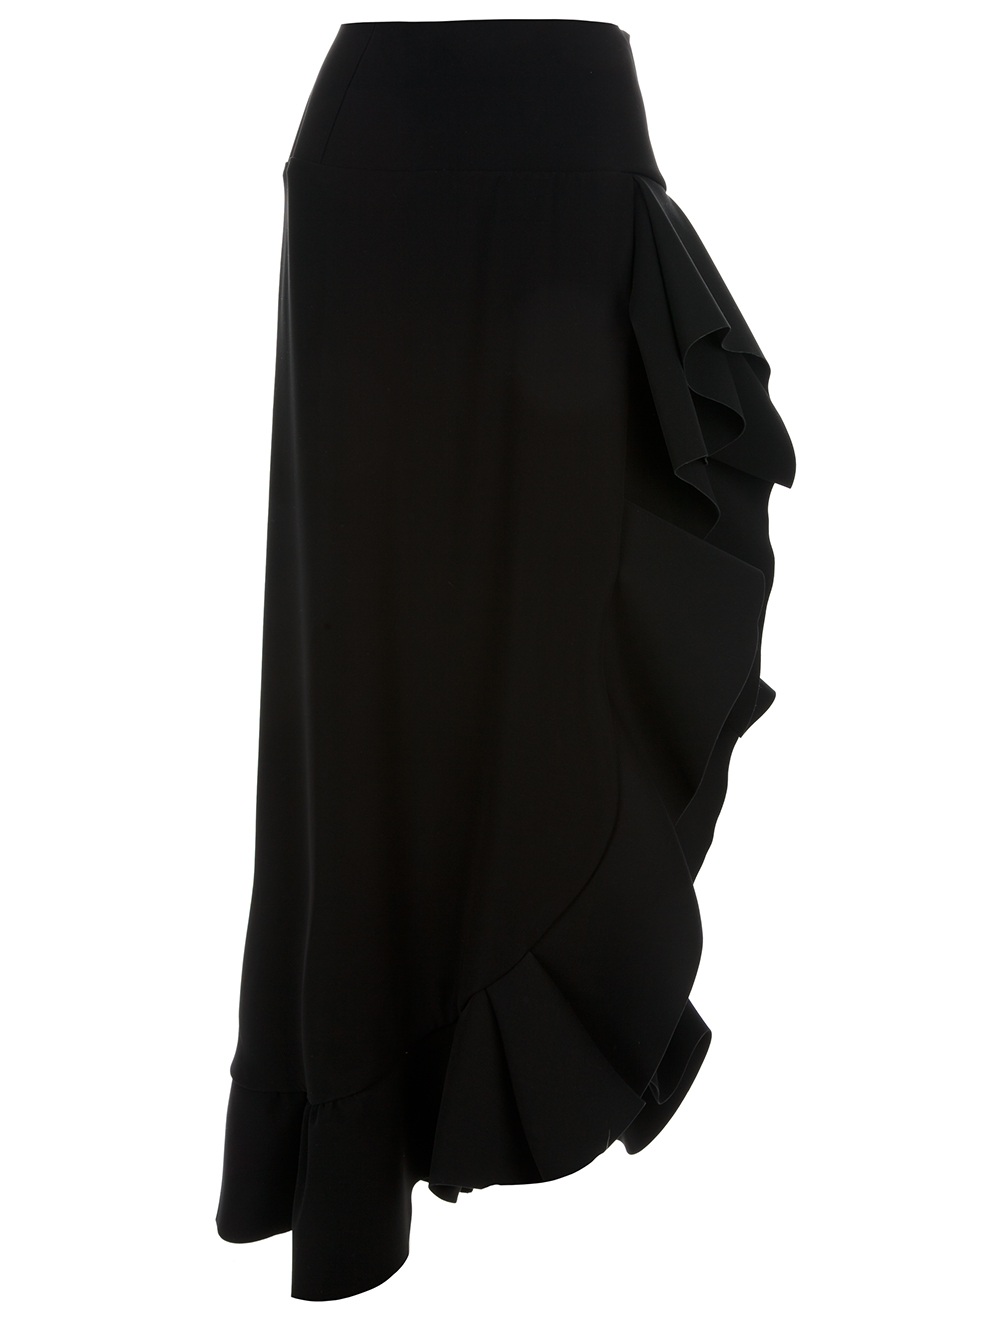 Balenciaga Ruffled Maxi Skirt in Black - Lyst